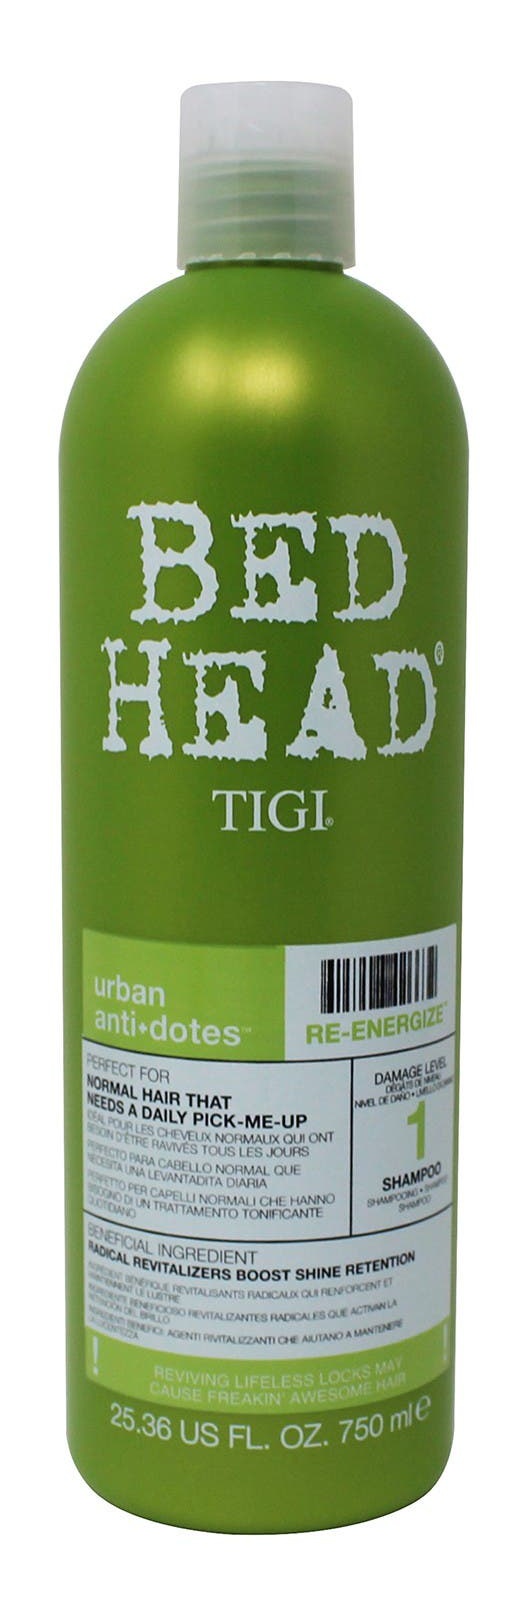 Tigi Bed Head Urban Antidotes Re-Energize Shampoo